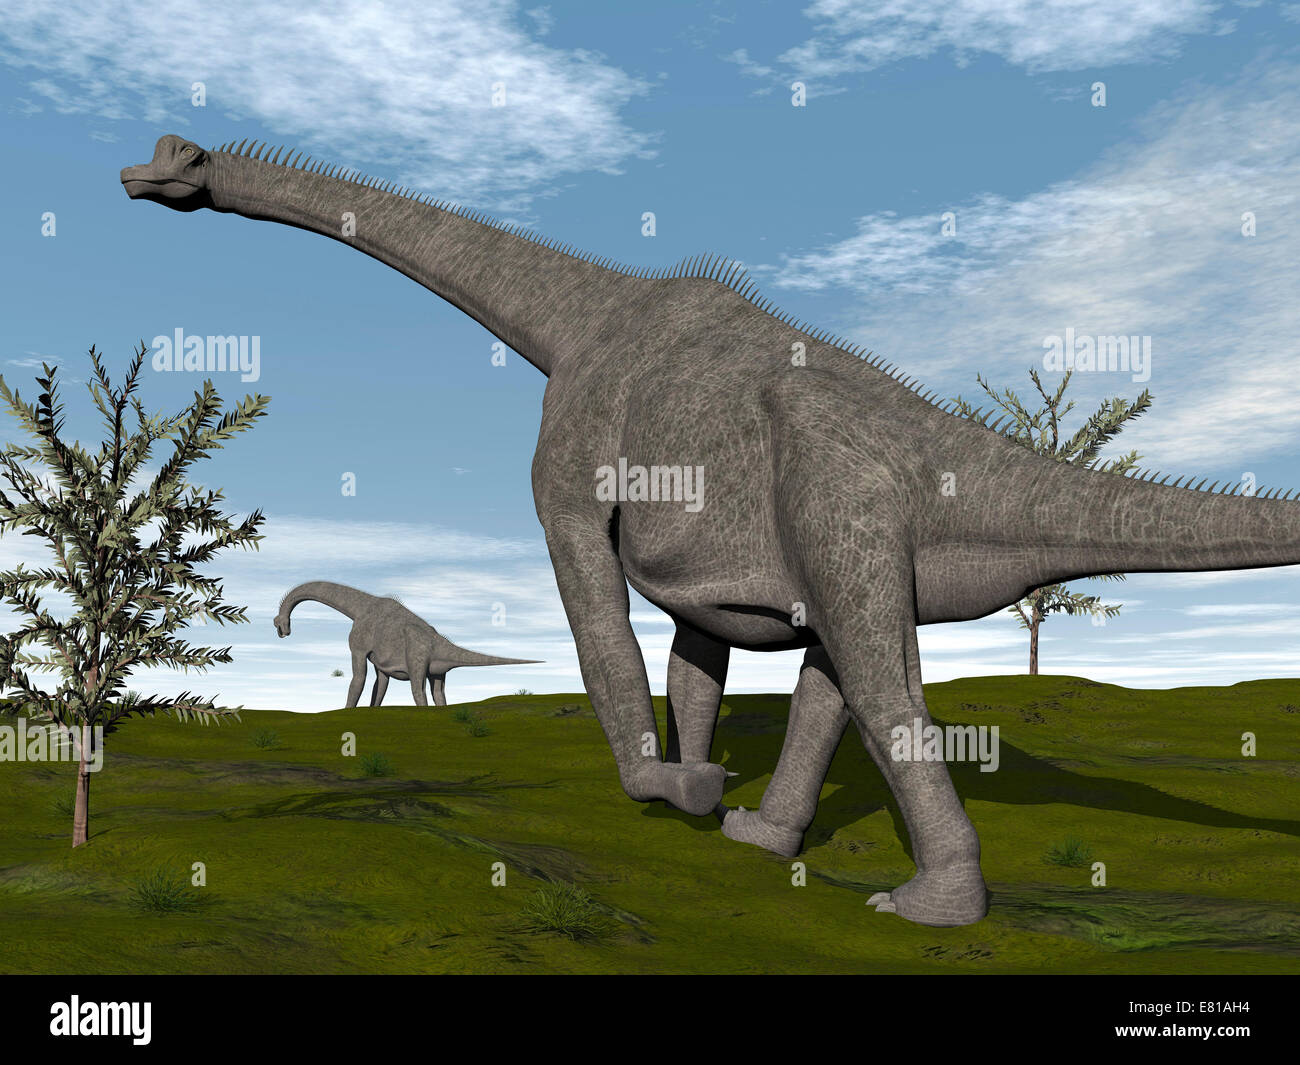 Brachiosaurus dinosaurs walking in an open field. Stock Photo